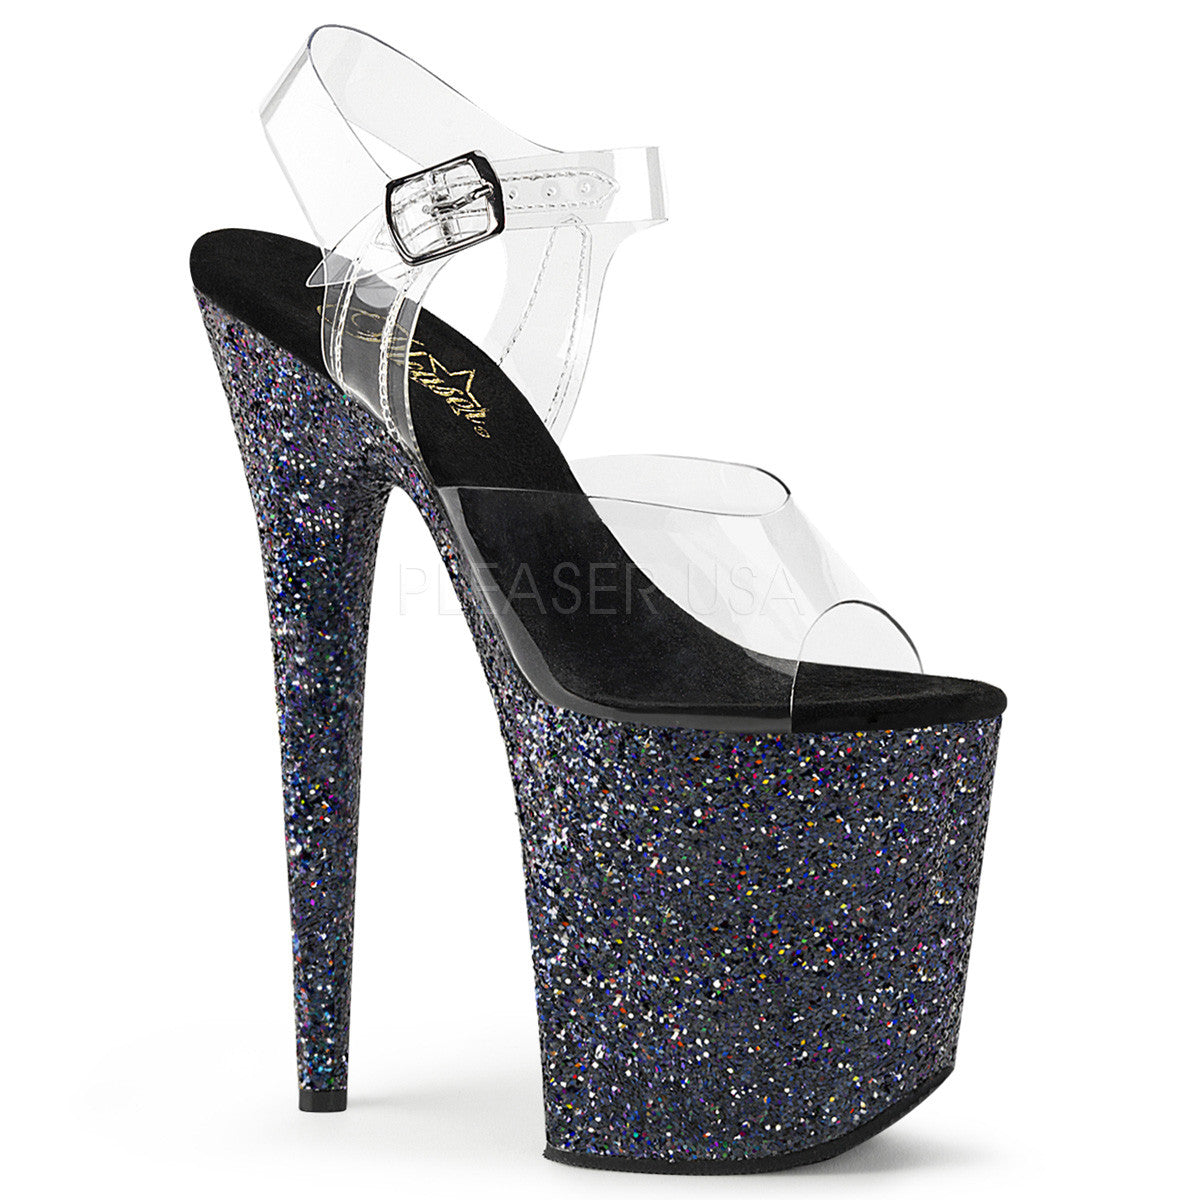 Pleaser FLAMINGO-808LG Black Holographic Glitter Ankle Strap Sandals - Shoecup.com - 1